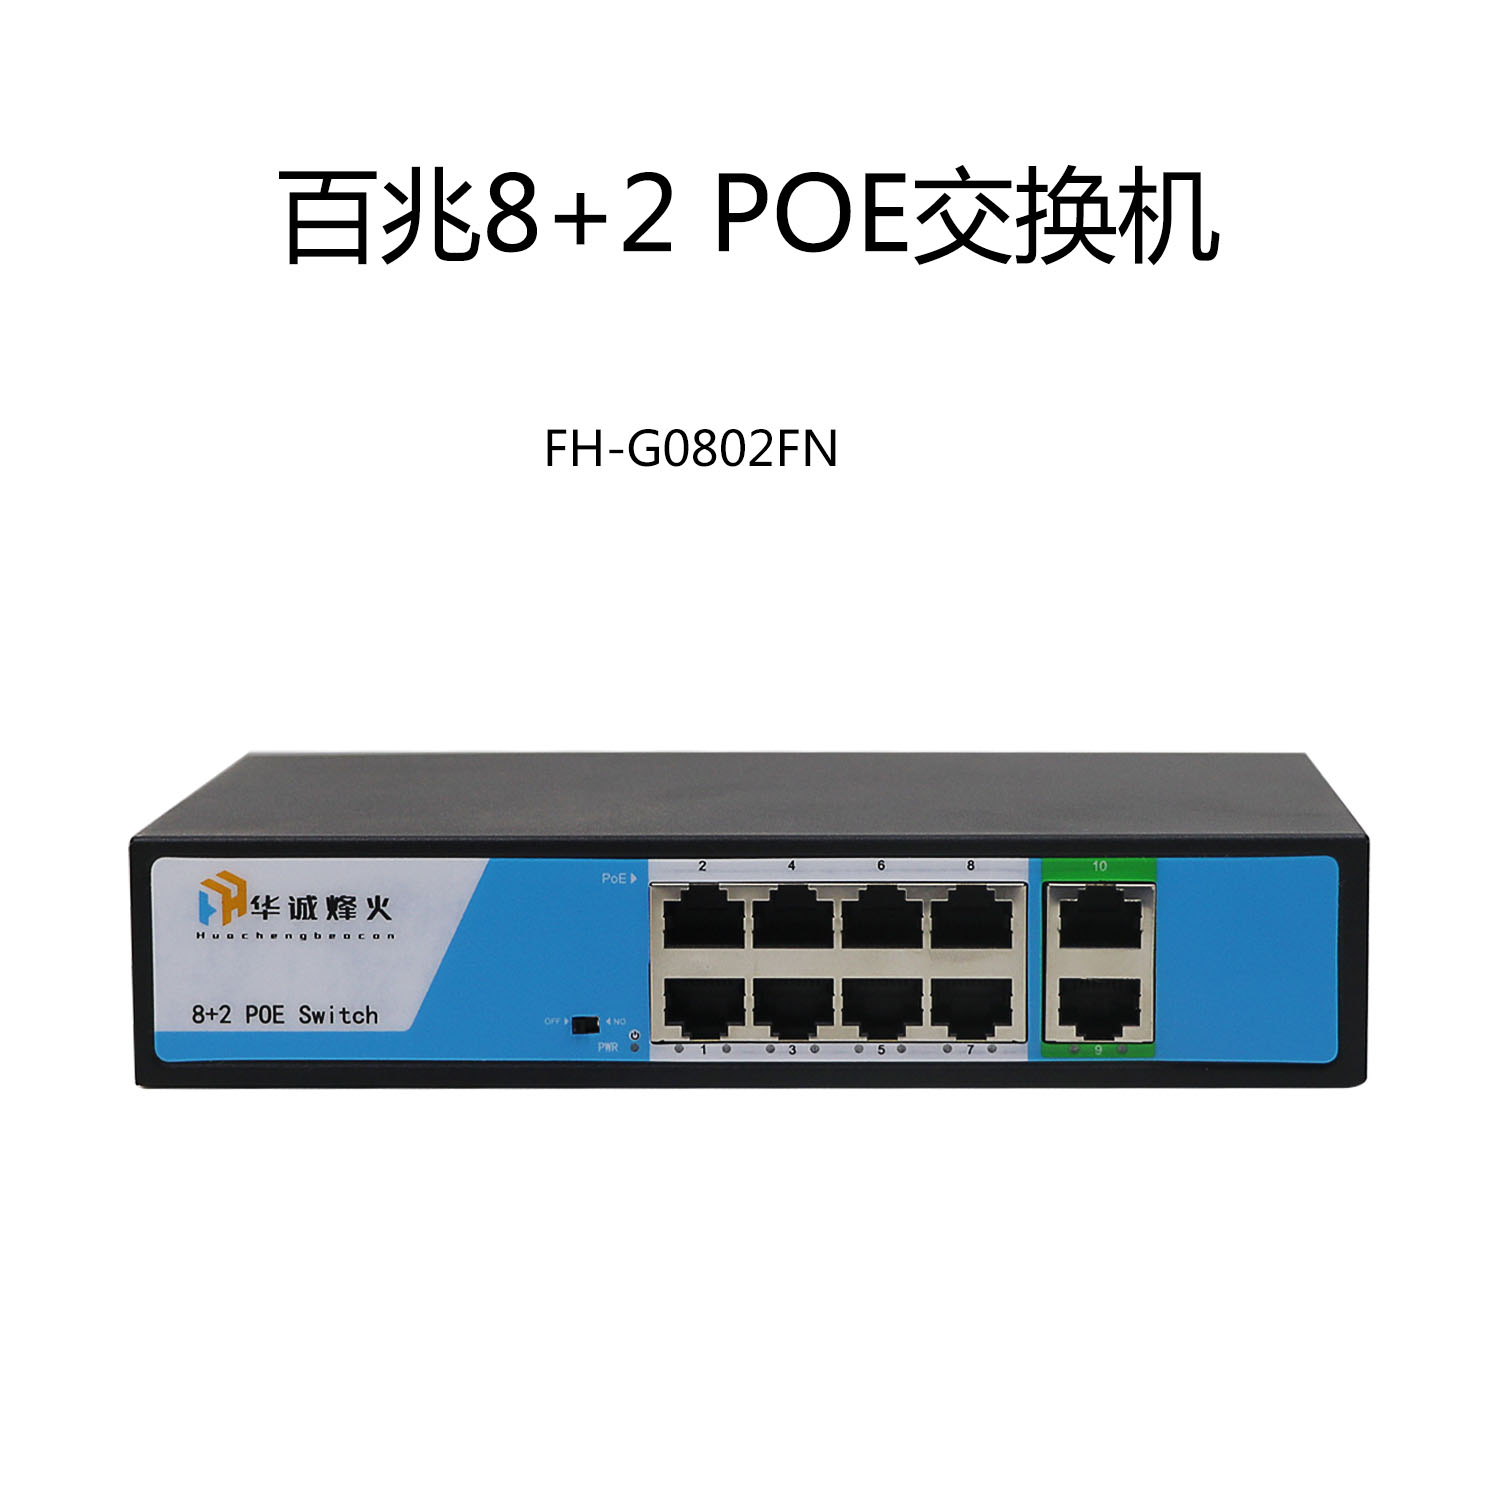 华诚烽火FH-G0802FN百兆8+2POE交换机监控安防